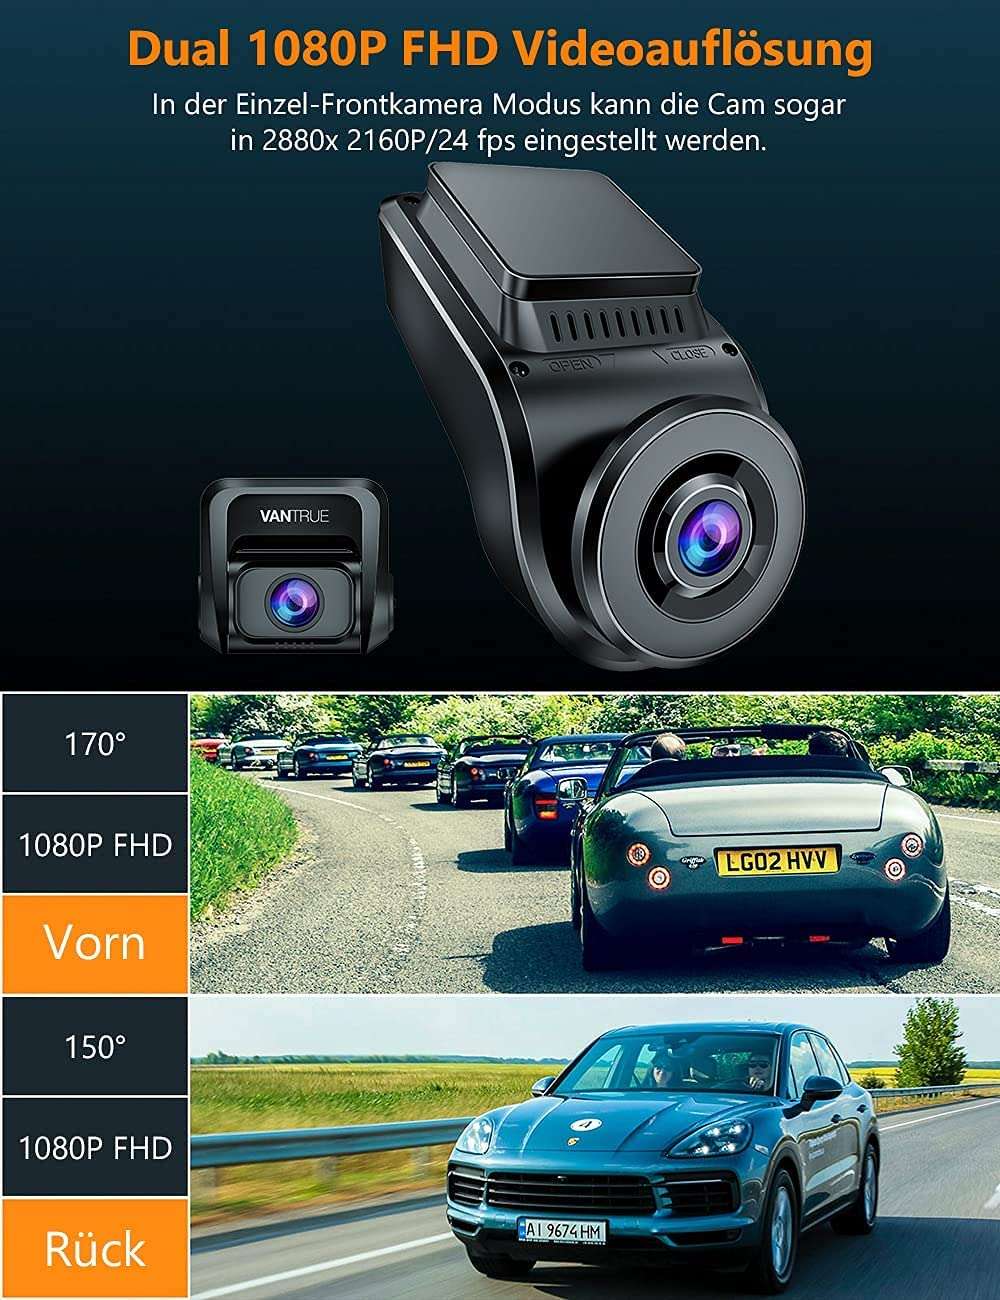 Vantrue S1 4K Dual Dash Cam Vehicle Cam Recorder,Built in GPS,Night Vision